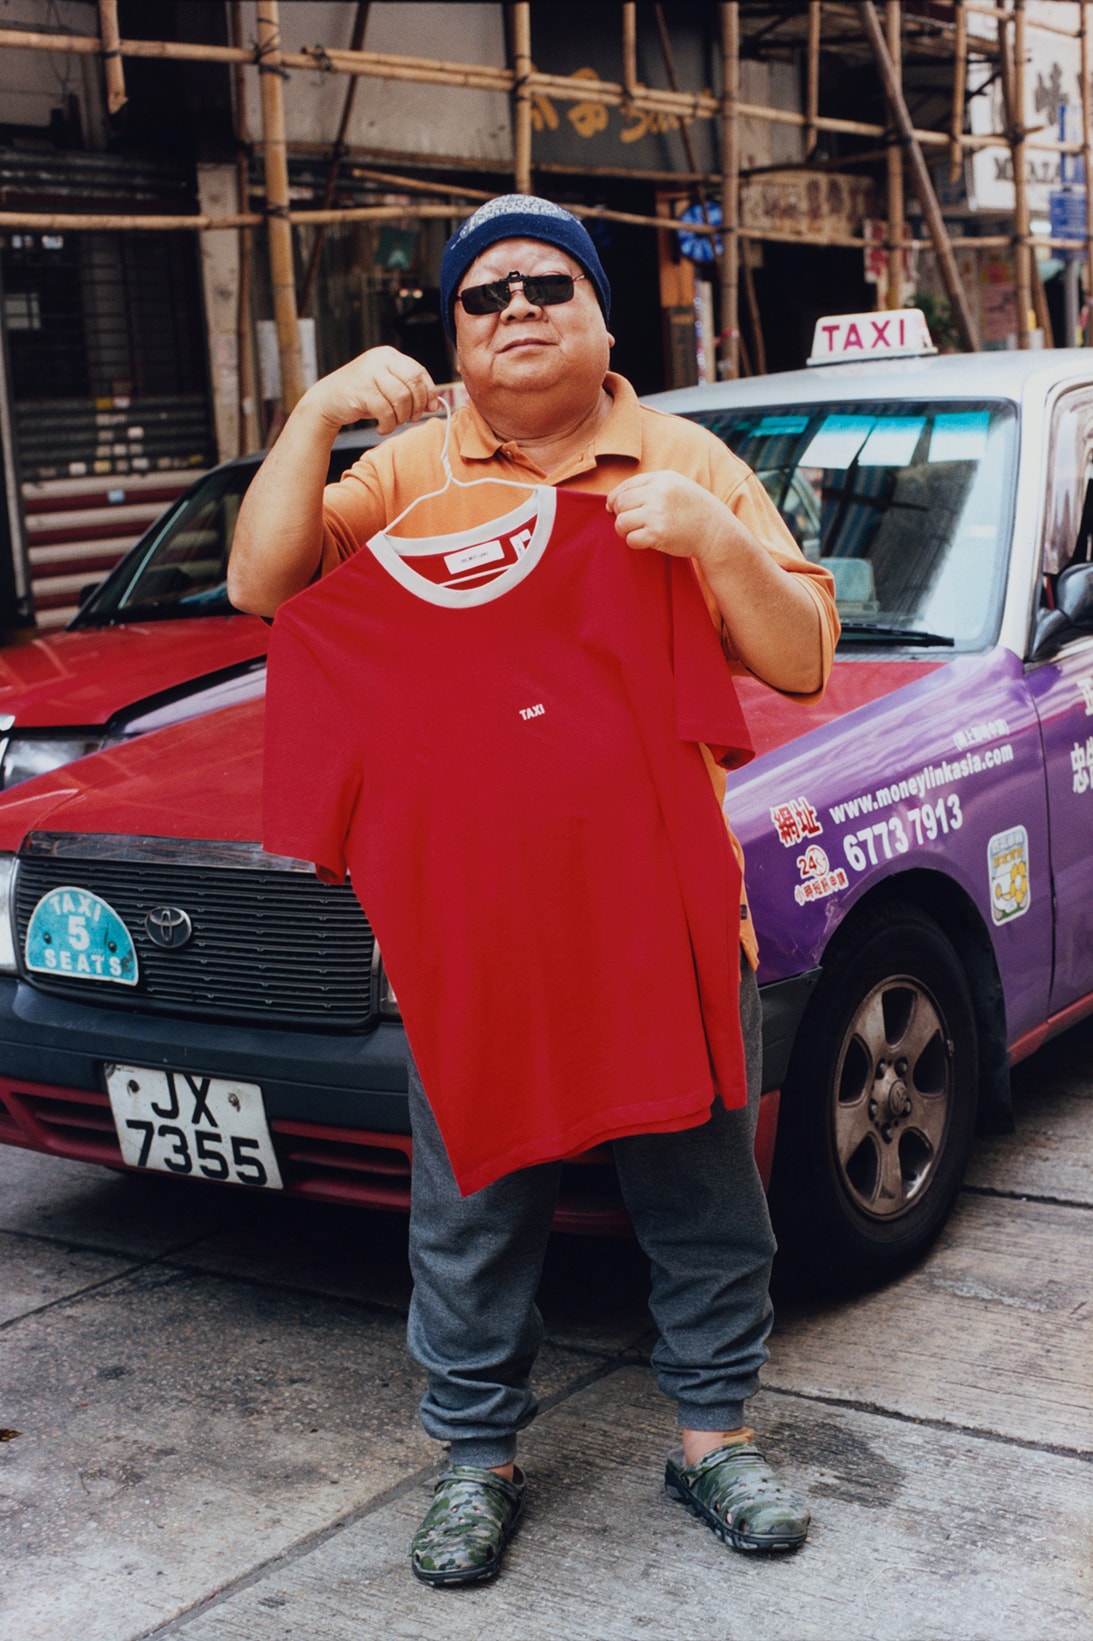 Helmut Lang Global Taxi Initiative campaign advertisement drivers limited edition 1998 yellow cab photographers hoodie tee shirt long short sleeve HONG KONG ALEXANDRA LEESE @ALEXLEESE  LONDON TOM EMMERSON @TOM.EMMERSON  NEW YORK ALEX LEE @ALEXLEENYC  PARIS PATRICK WELDE @PATRICKWELDE  TOKYO KENTA NAKAMURA @HANAHANAMEGANE17 reference homage may 30 2018 pre order